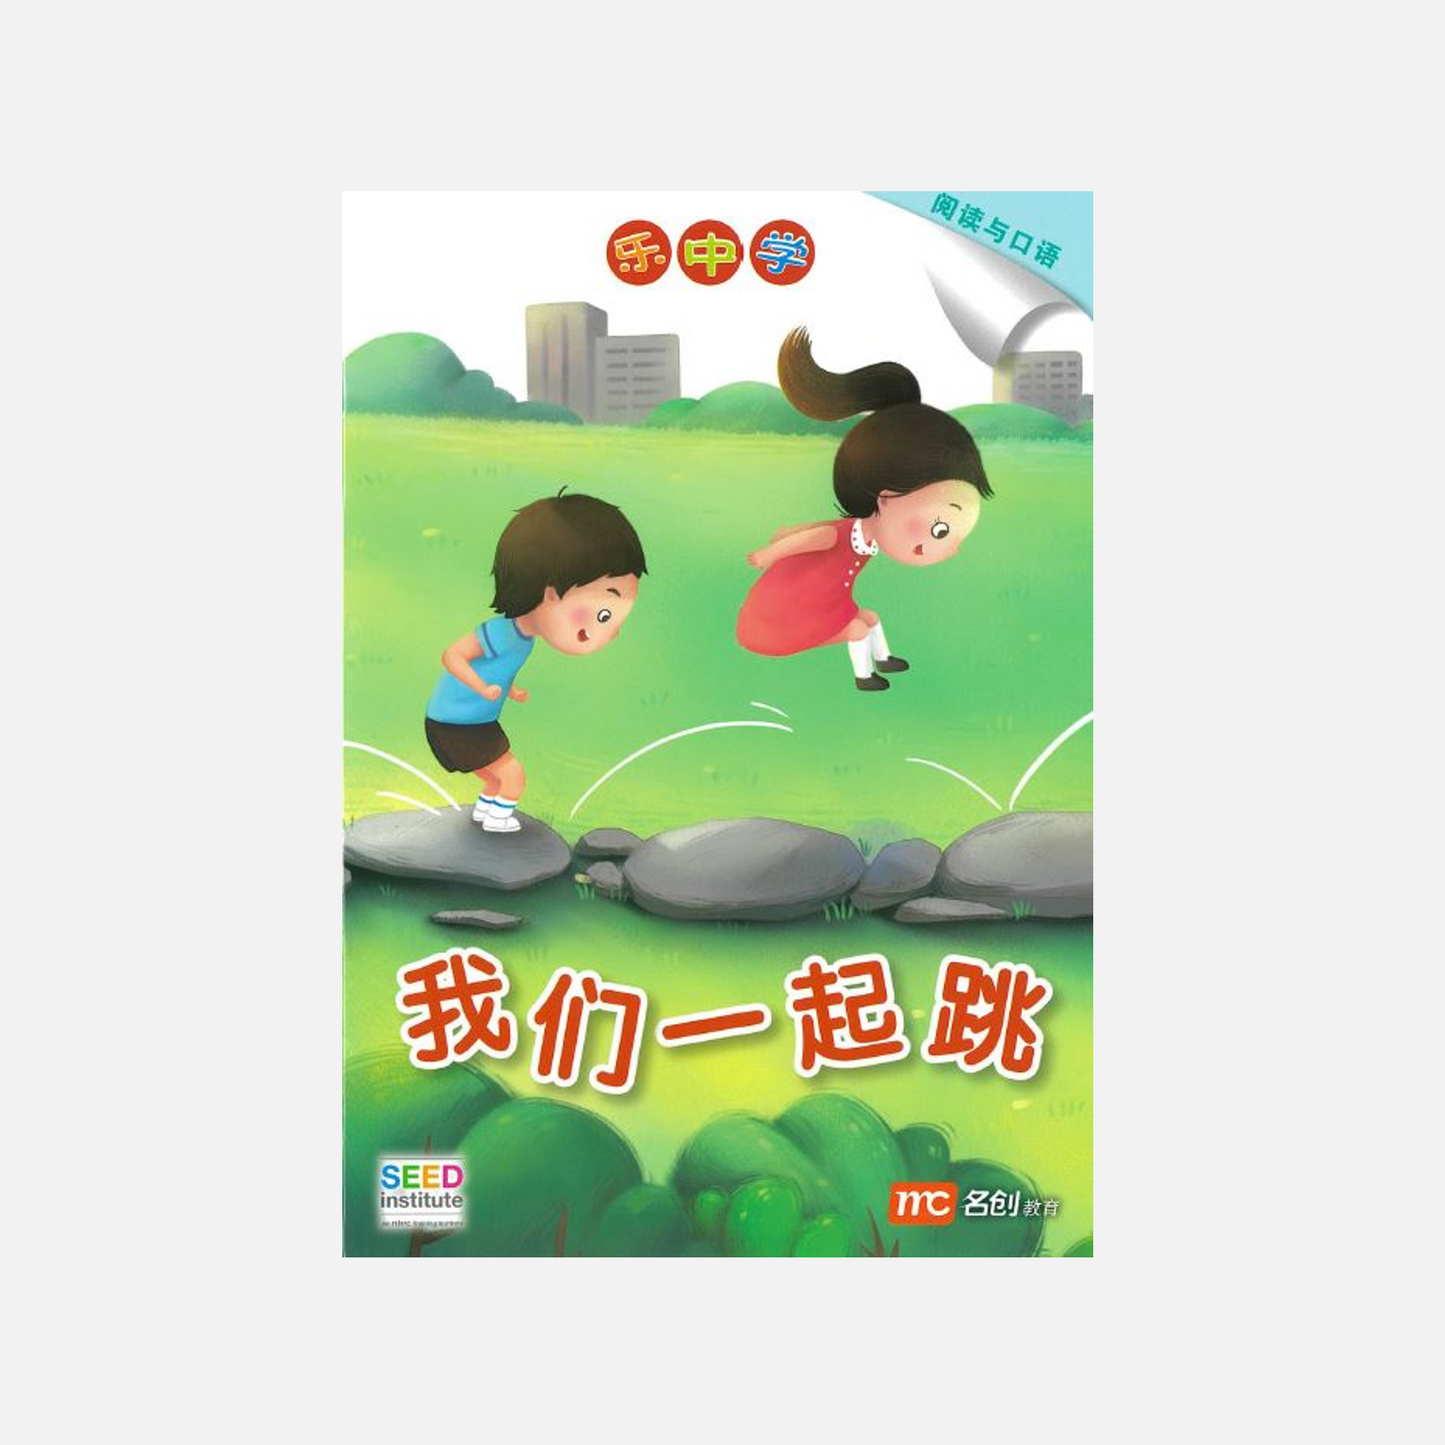 Caterpillar eBook Series (Kindergarten 1)  毛毛虫系列 K1